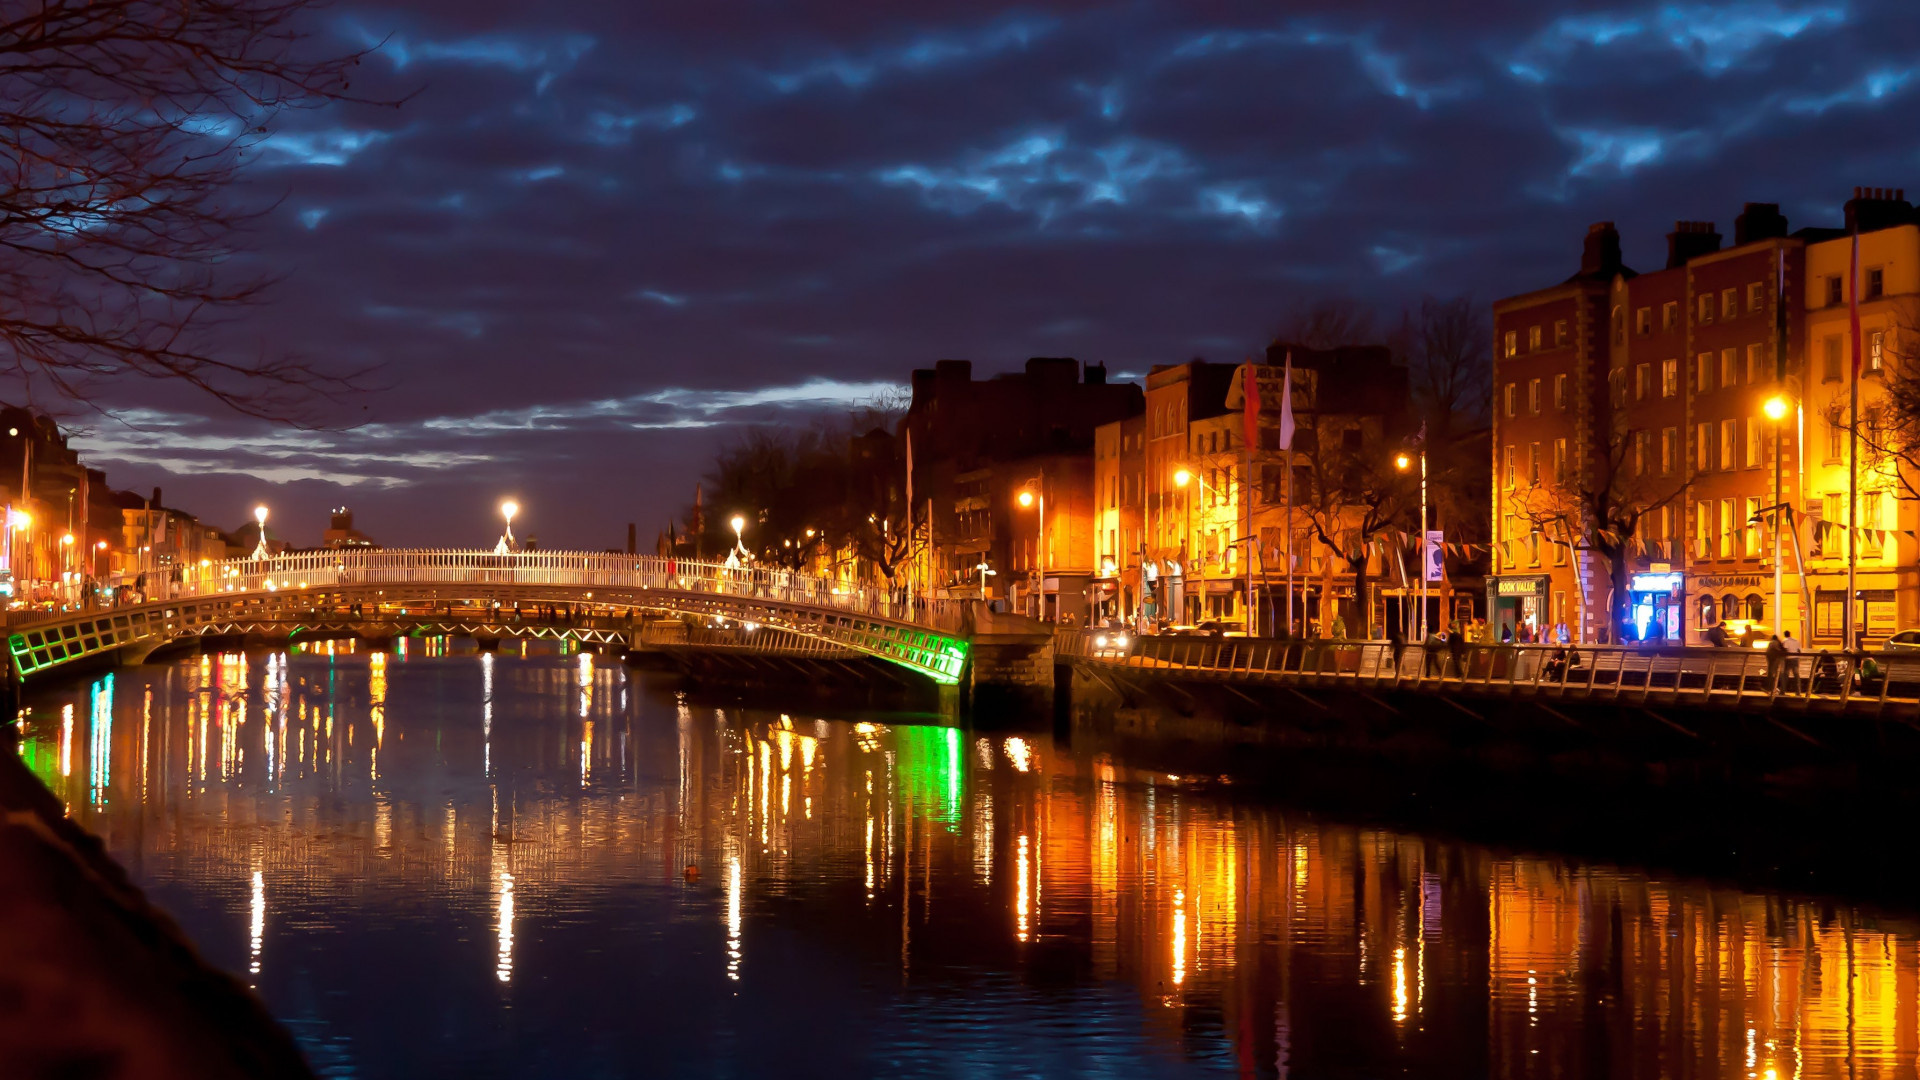 Dublin: The capital city of the Republic of Ireland, The River Liffey, Cityscape at dusk. 1920x1080 Full HD Wallpaper.